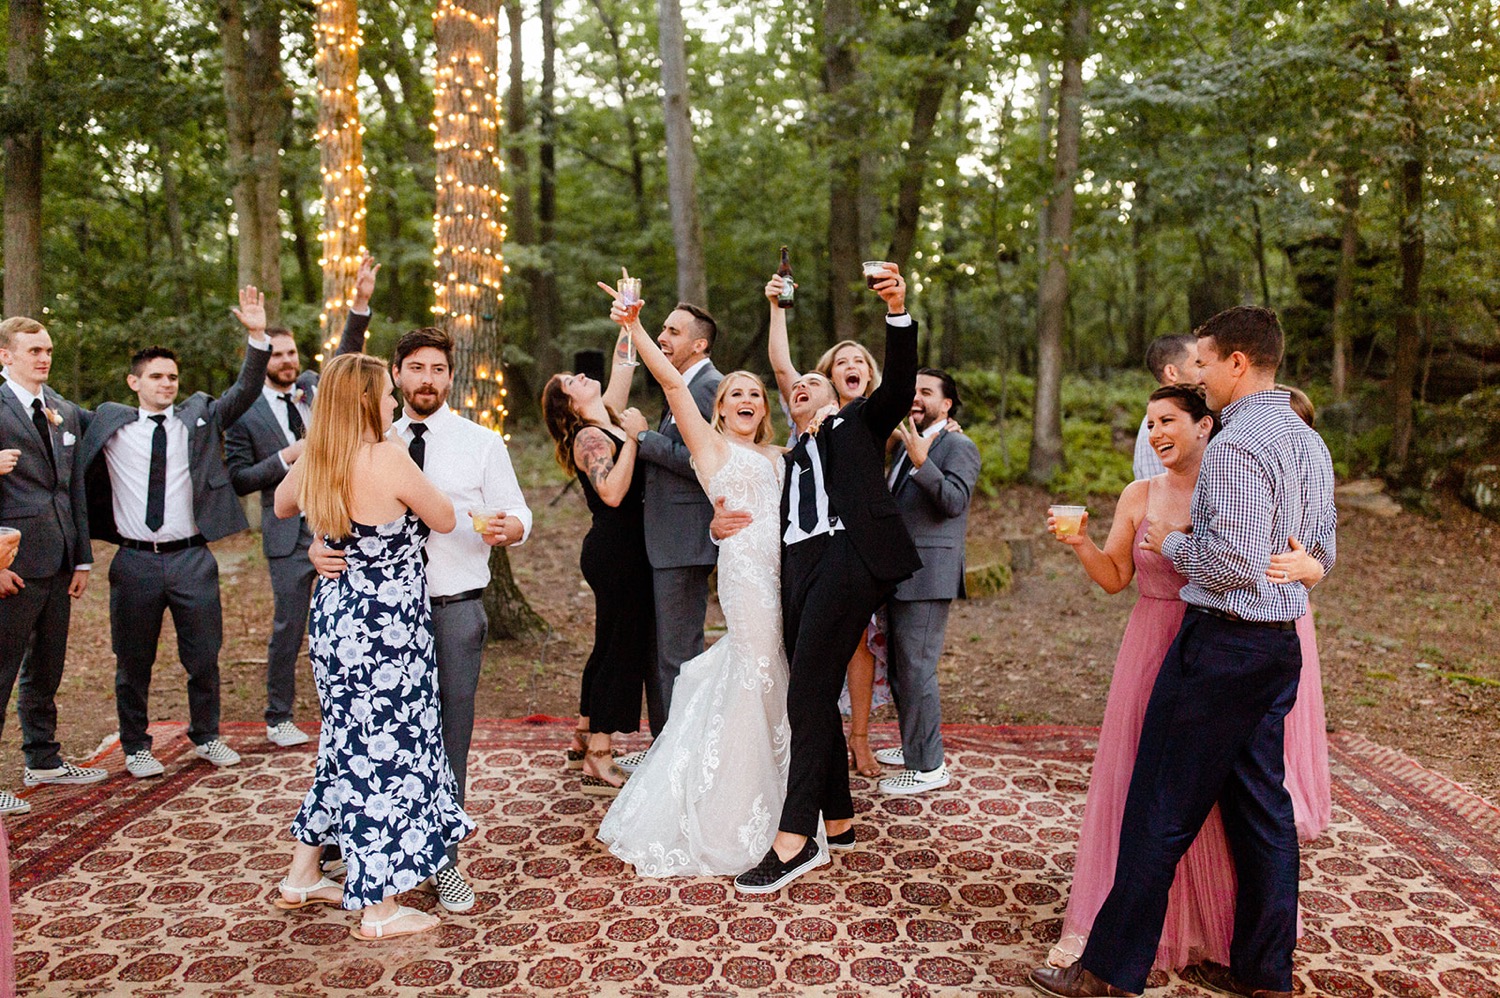 guests raising glasses celebrating dancing on carper in forest bohemian backyard wedding